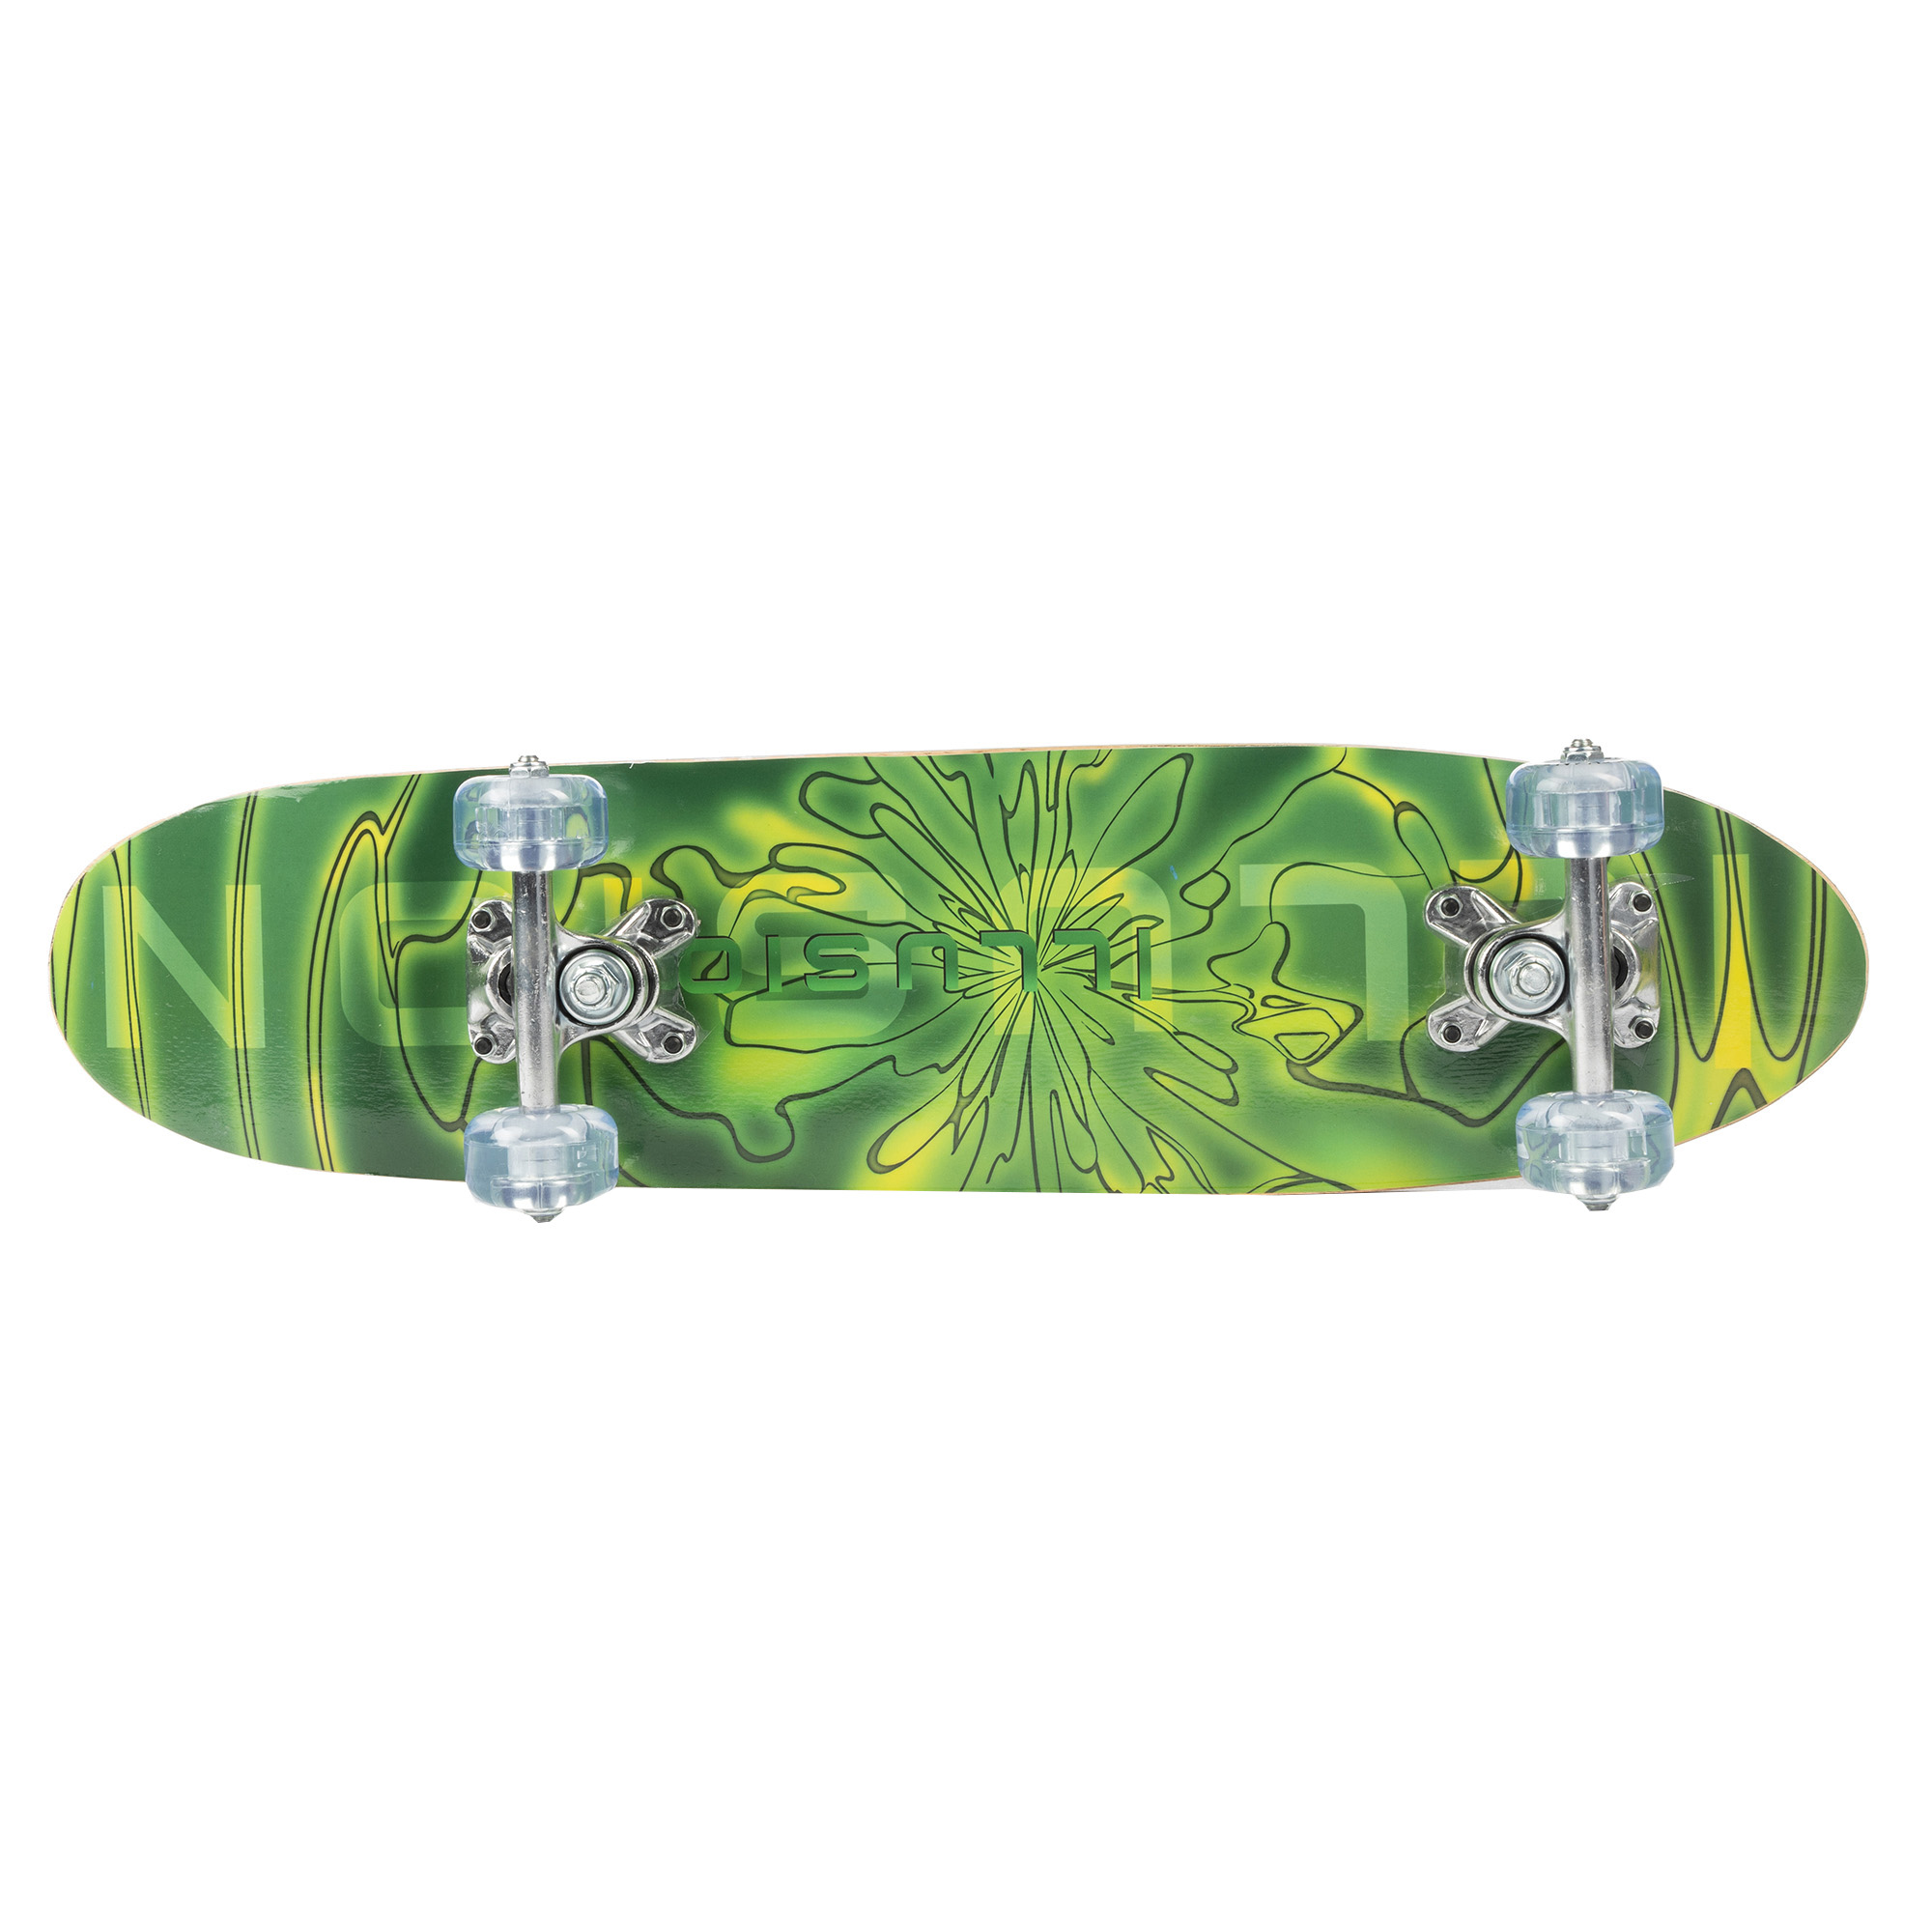 Detský longboard Mechanics Medium Alu 21 green MedAlu21 skateboard